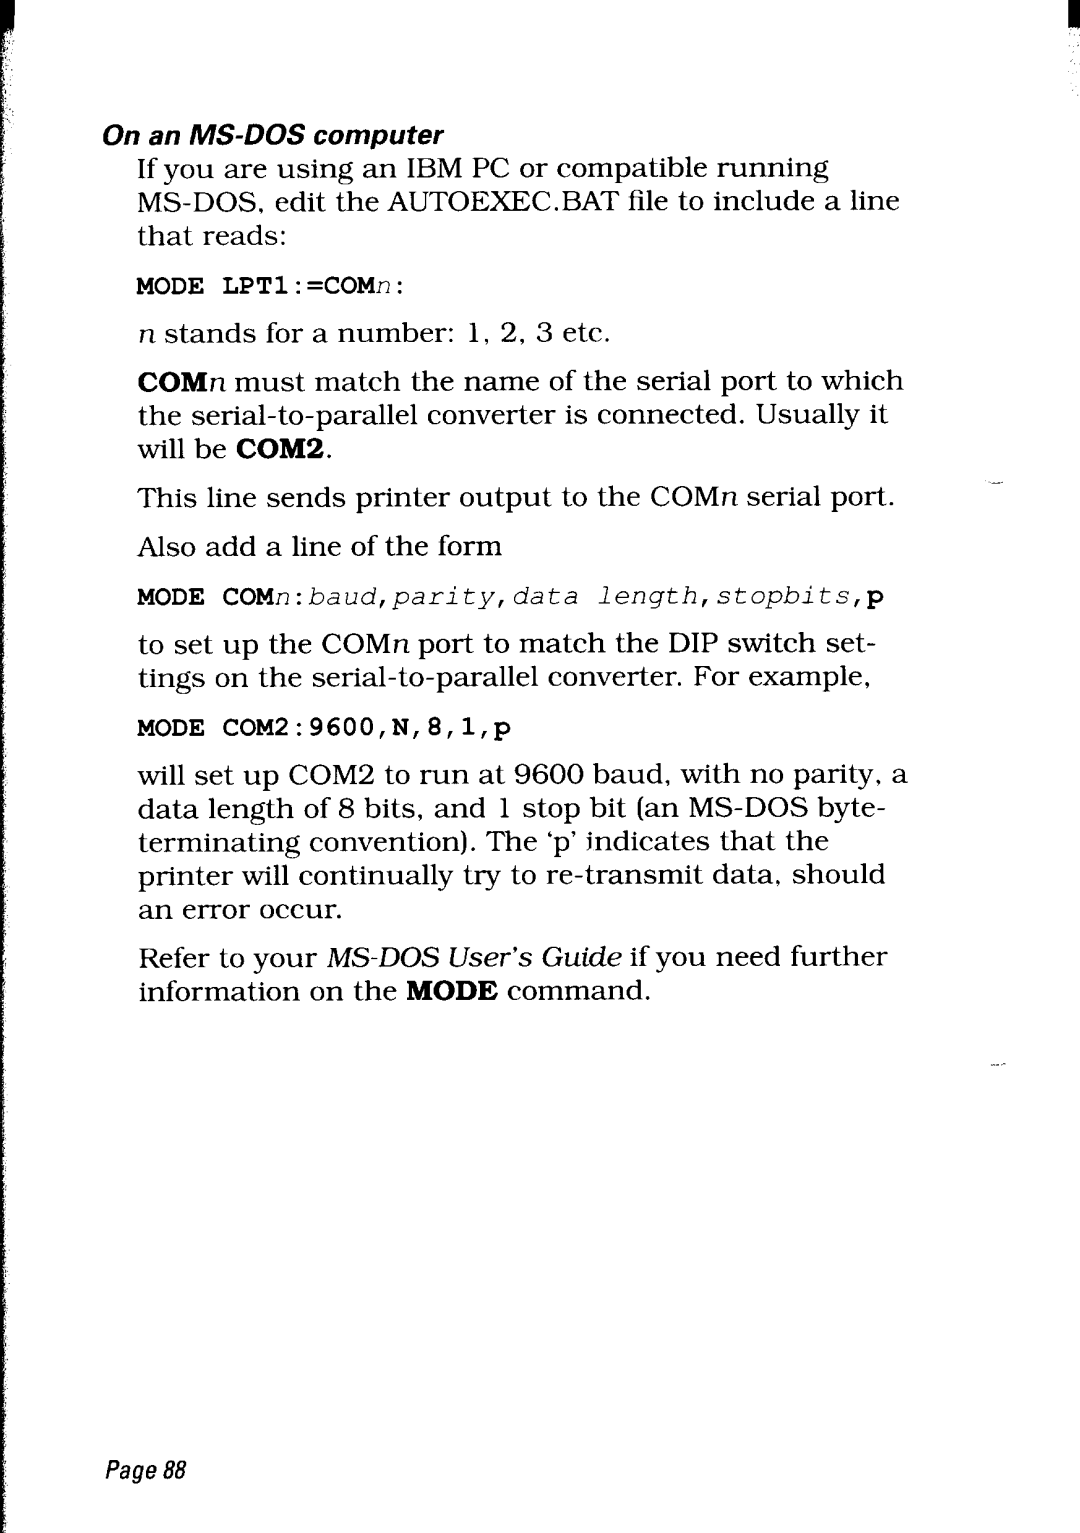 Star Micronics LC24-30 user manual On an MS-DOS computer, MODE LPTl=COMn, MODE COMnbaud,parity,data length, stopbits,p 